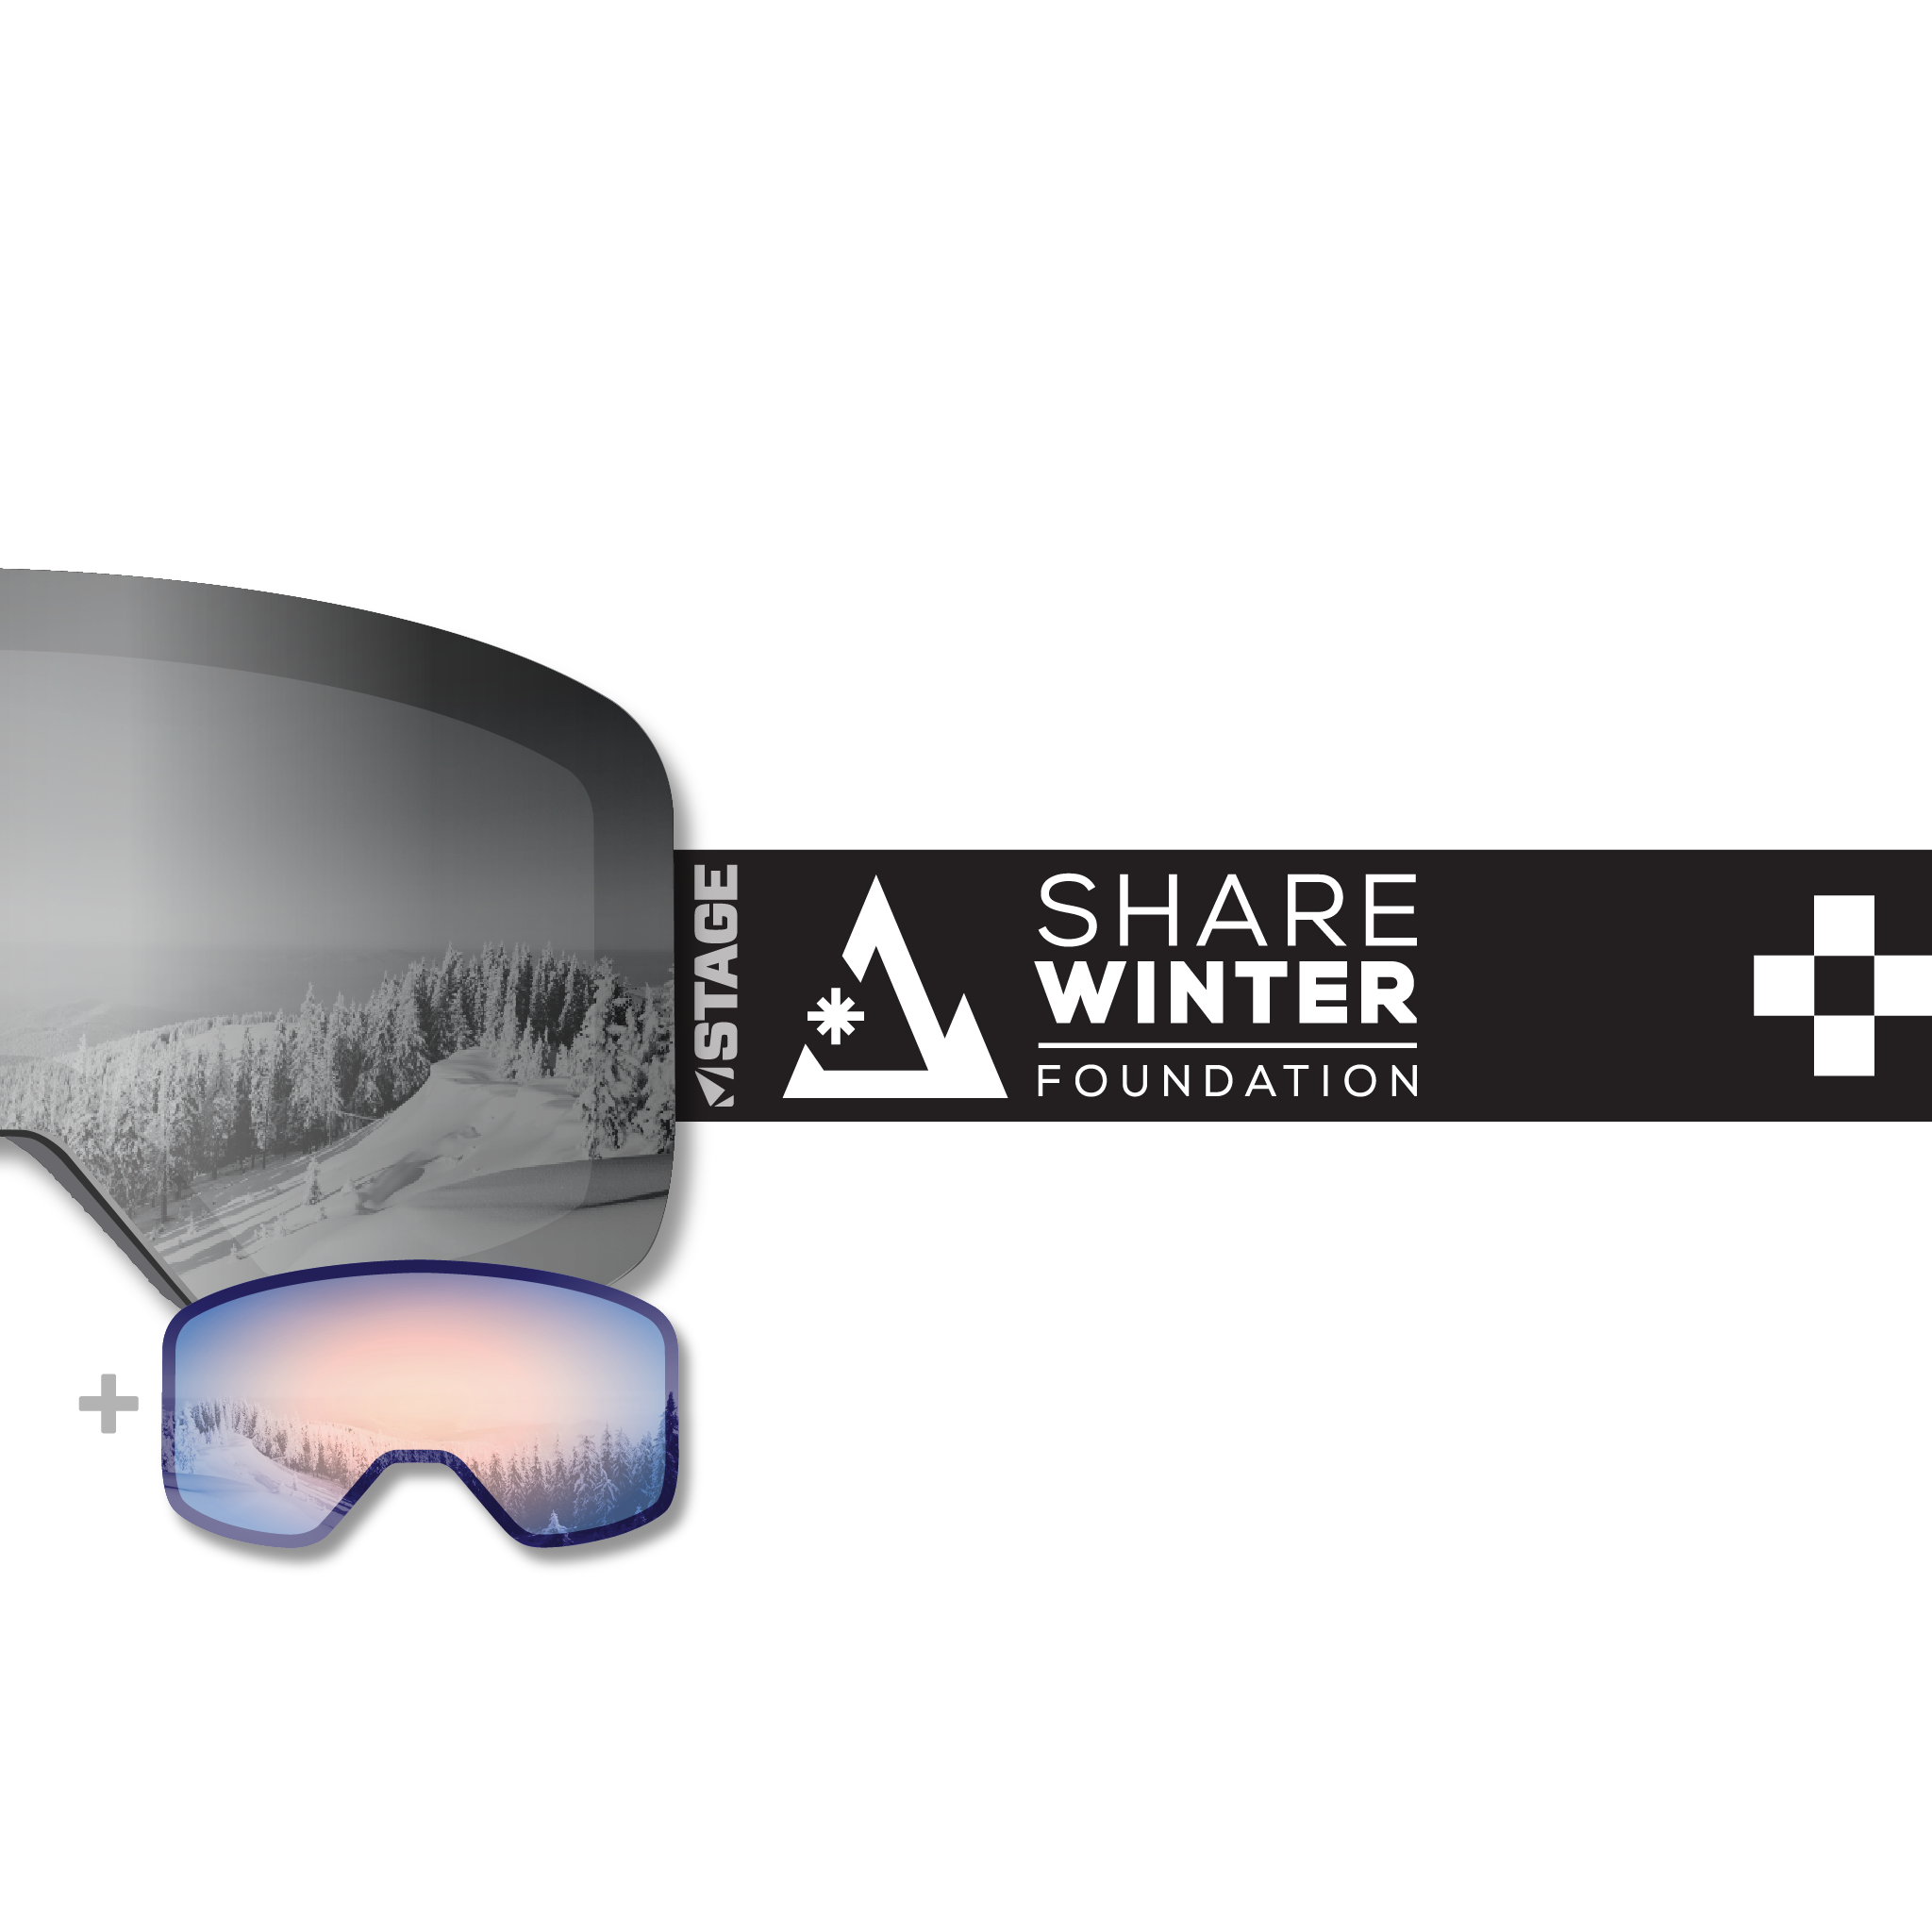 Share Winter Foundation Propnetic - Magnetic Ski Goggle + Bonus Lens